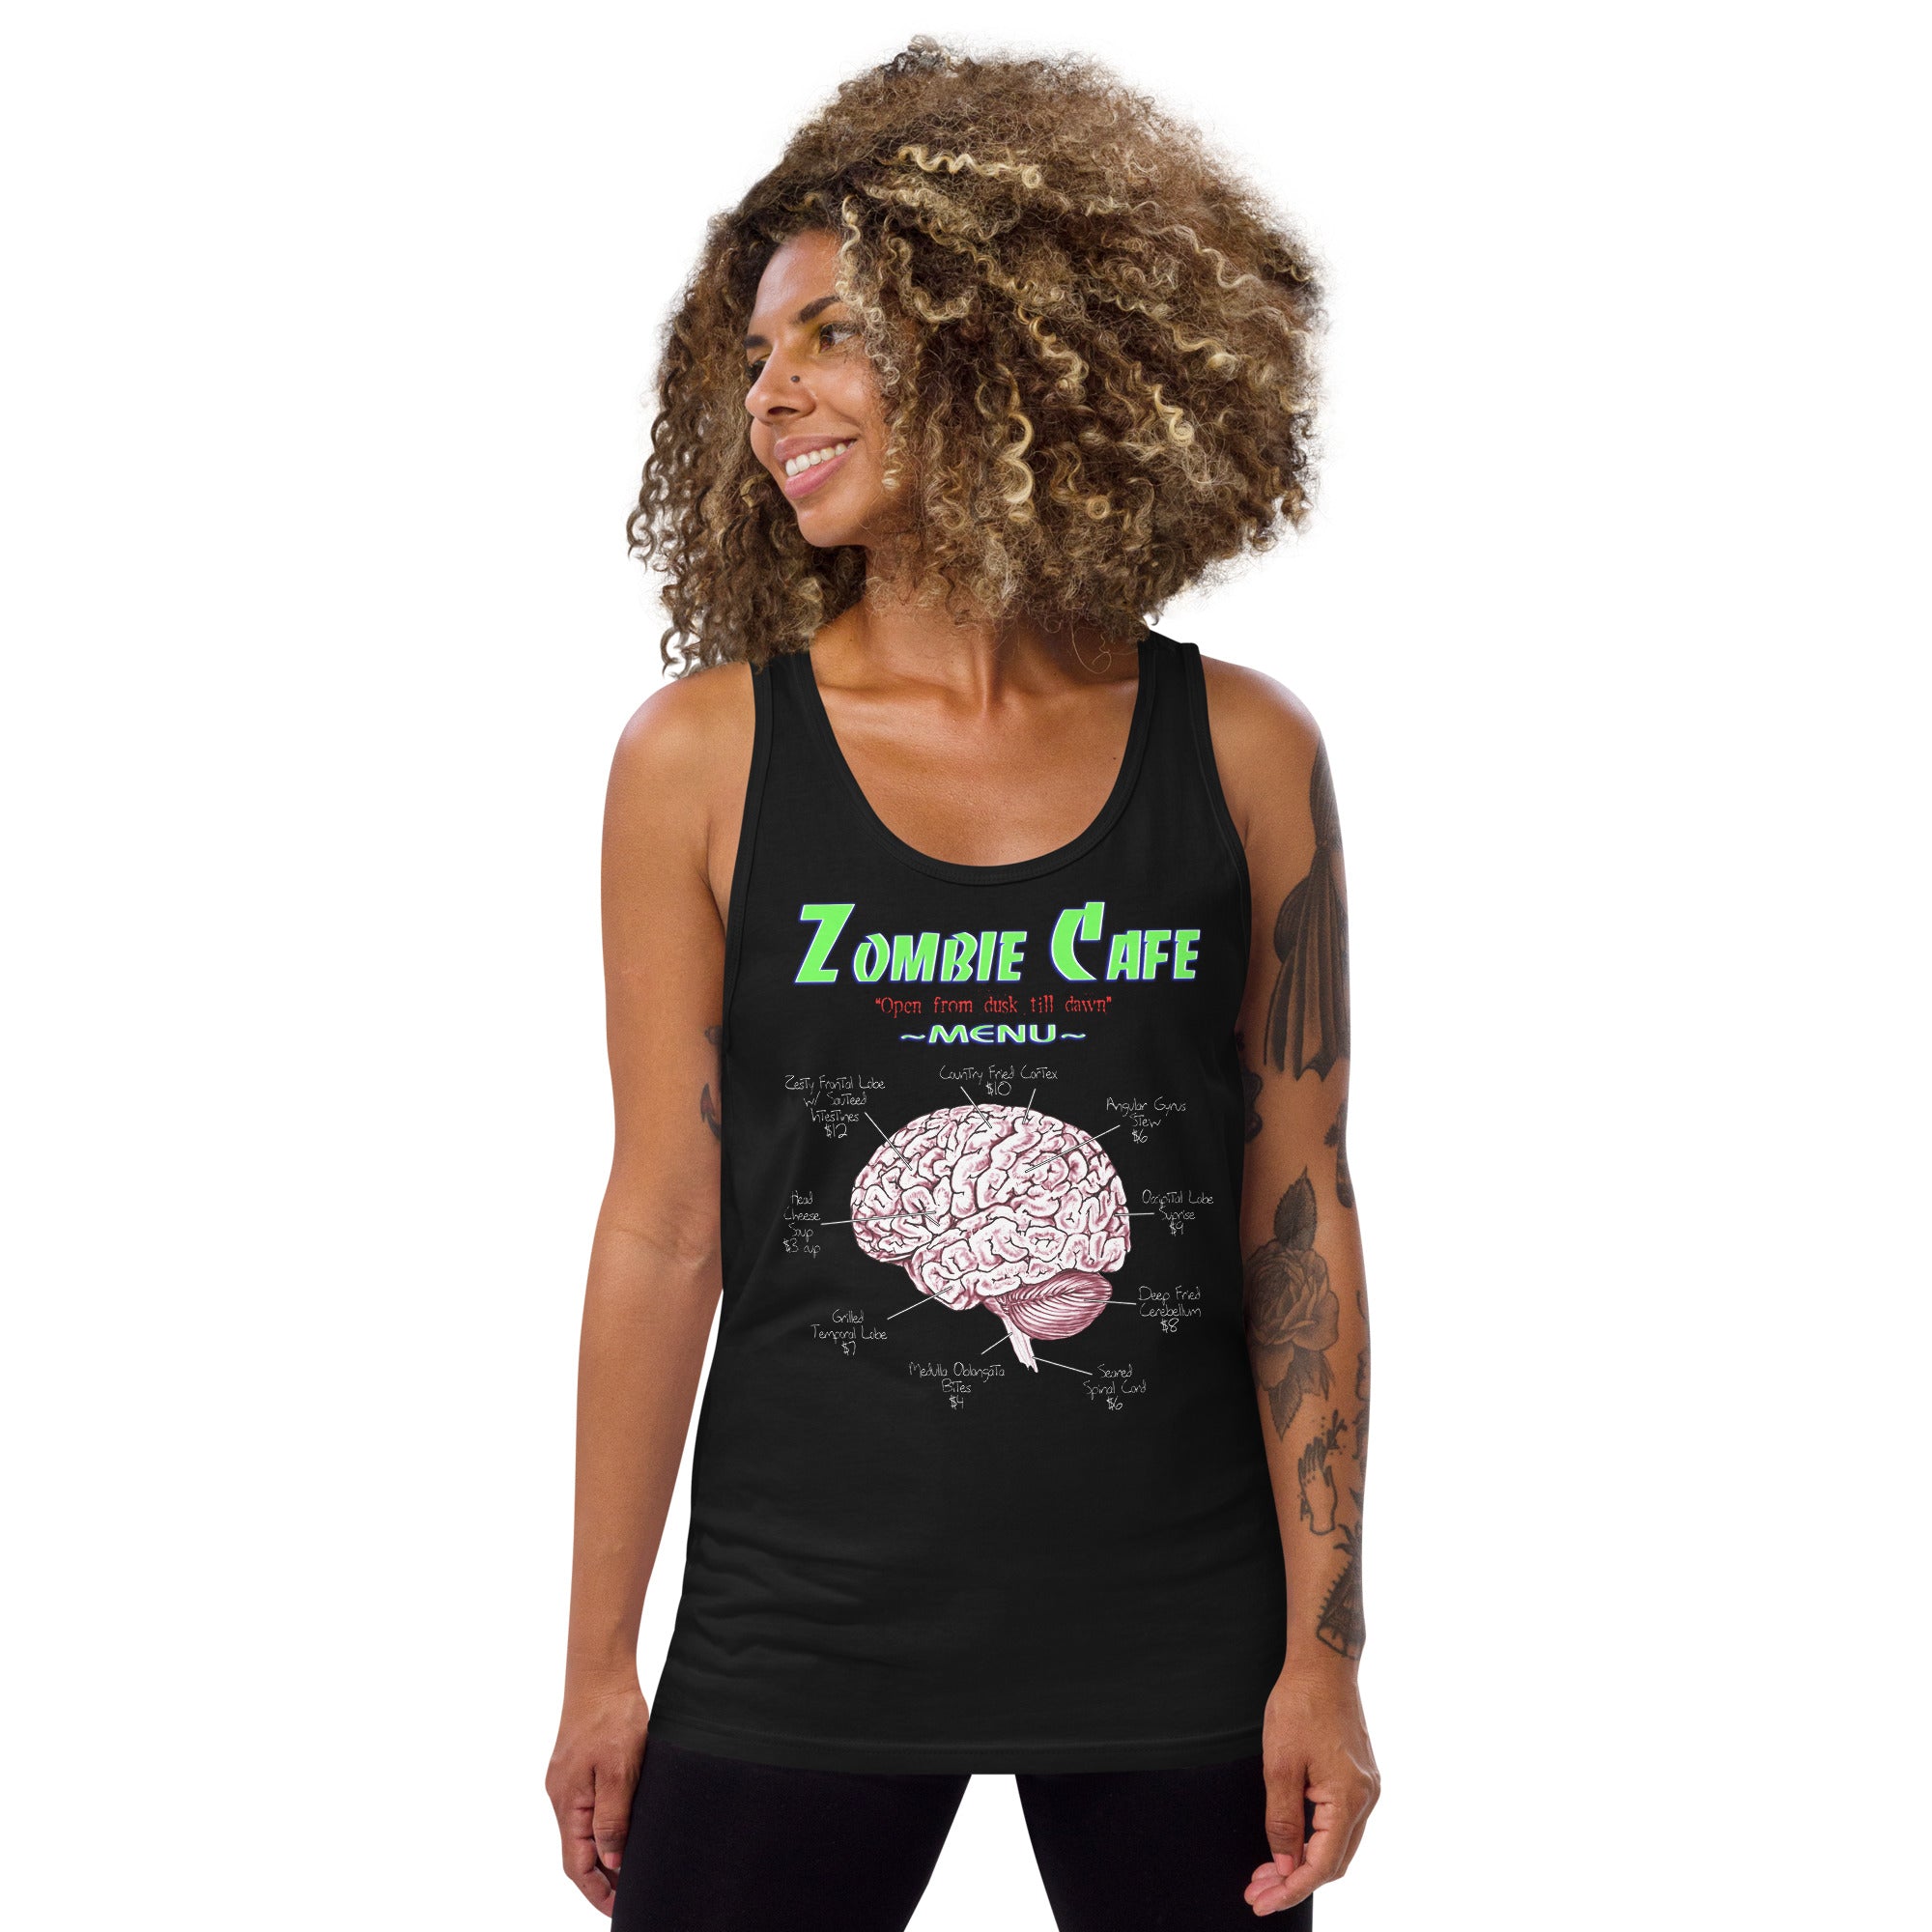 Zombie Cafe Brains Menu Horror Men's Tank Top Shirt - Edge of Life Designs